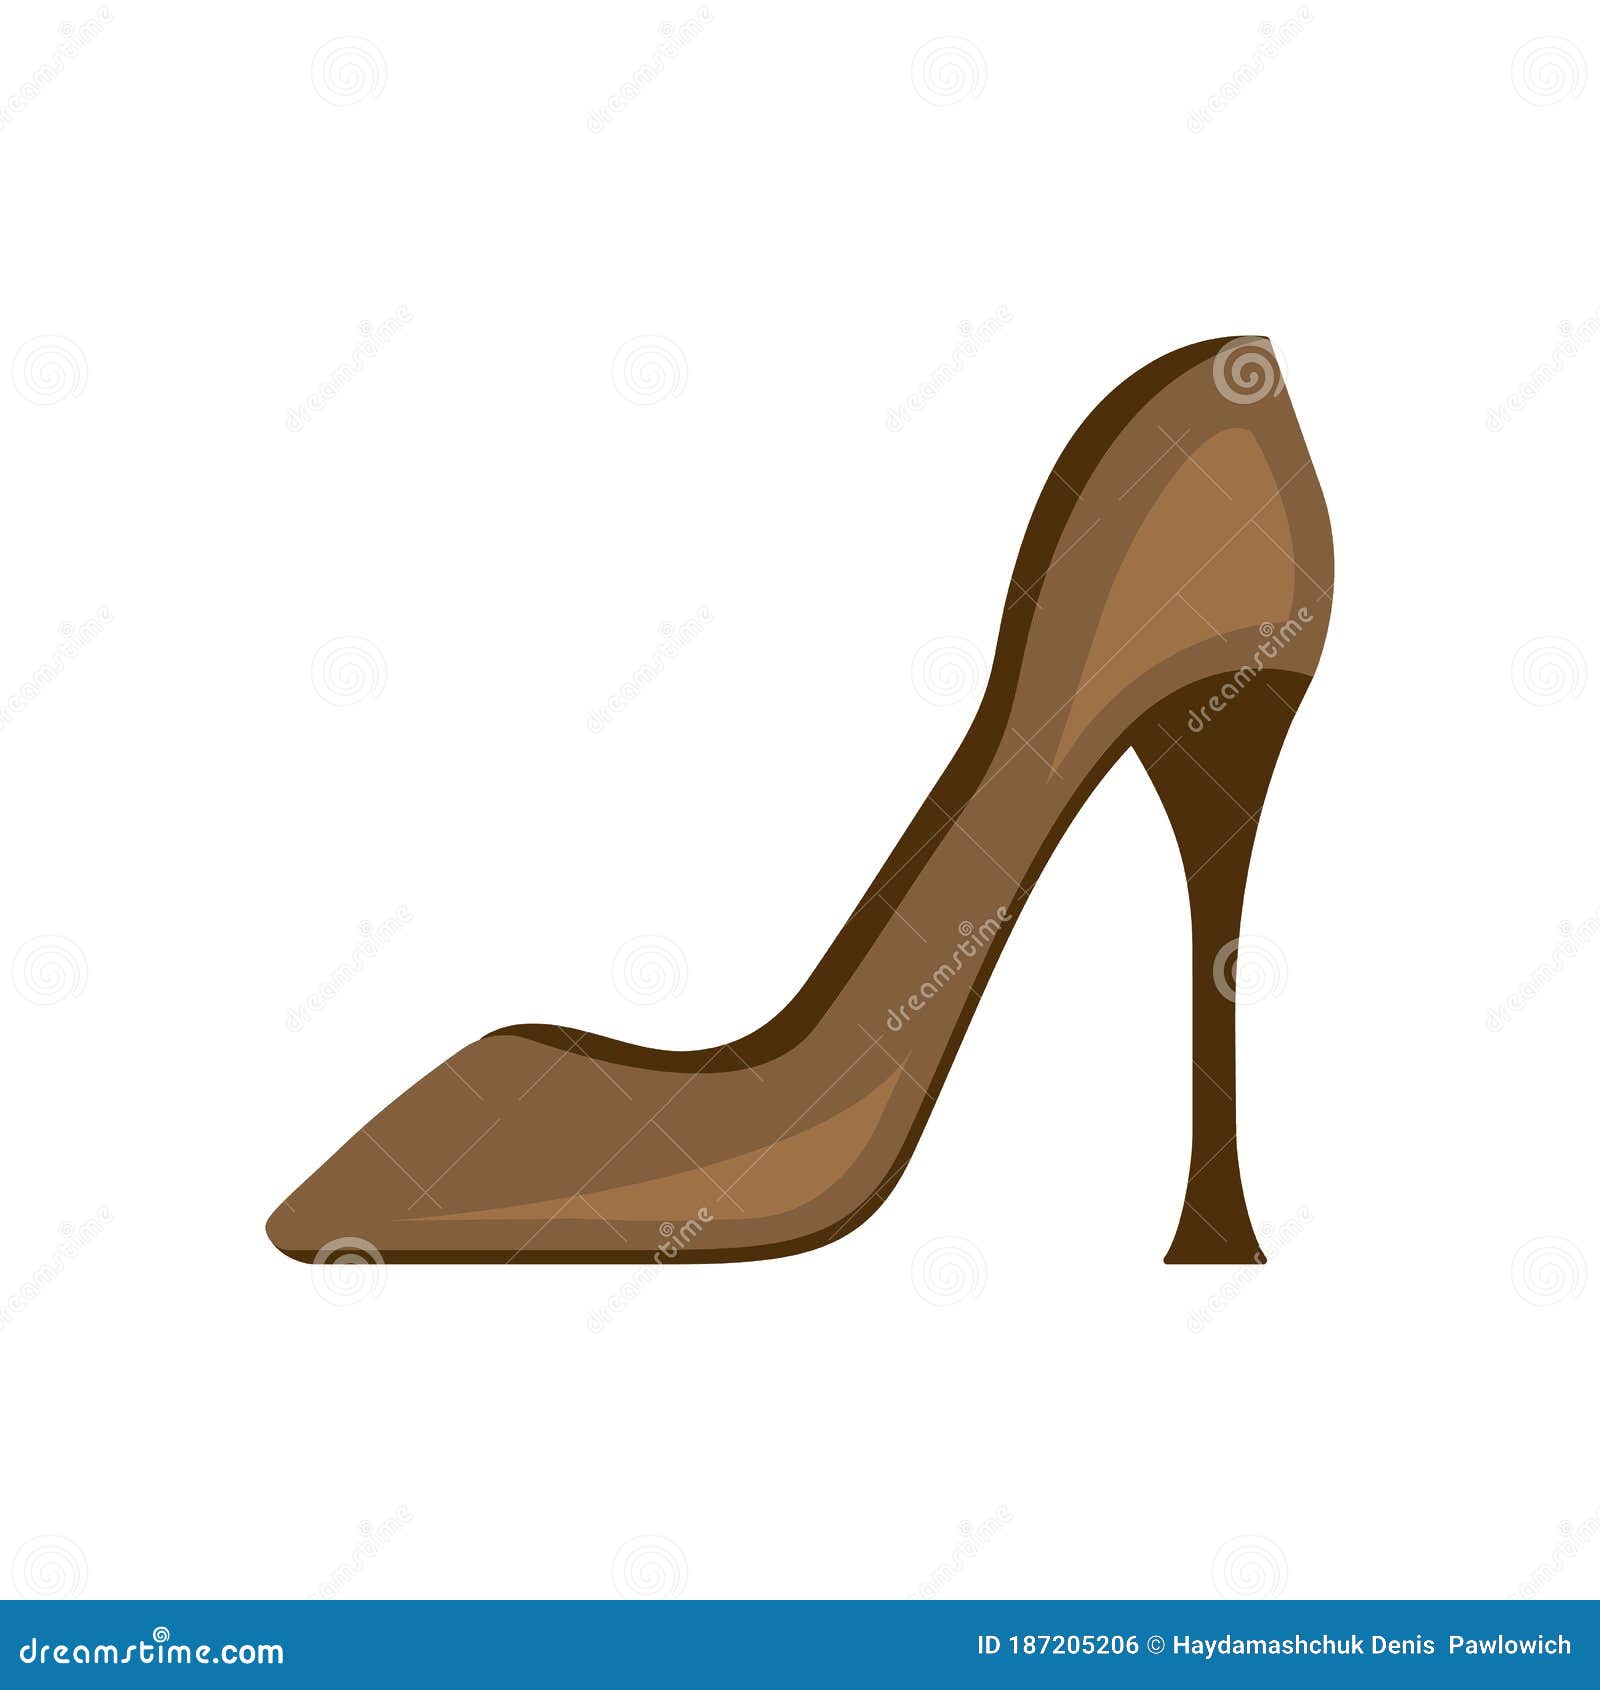 Zapatos Coloridos Para Tacones Altos Estiletto Para Mujeres Calzado Moda Para Niñas. Ilustración del Vector - Ilustración de accesorio, rojo: 187205206